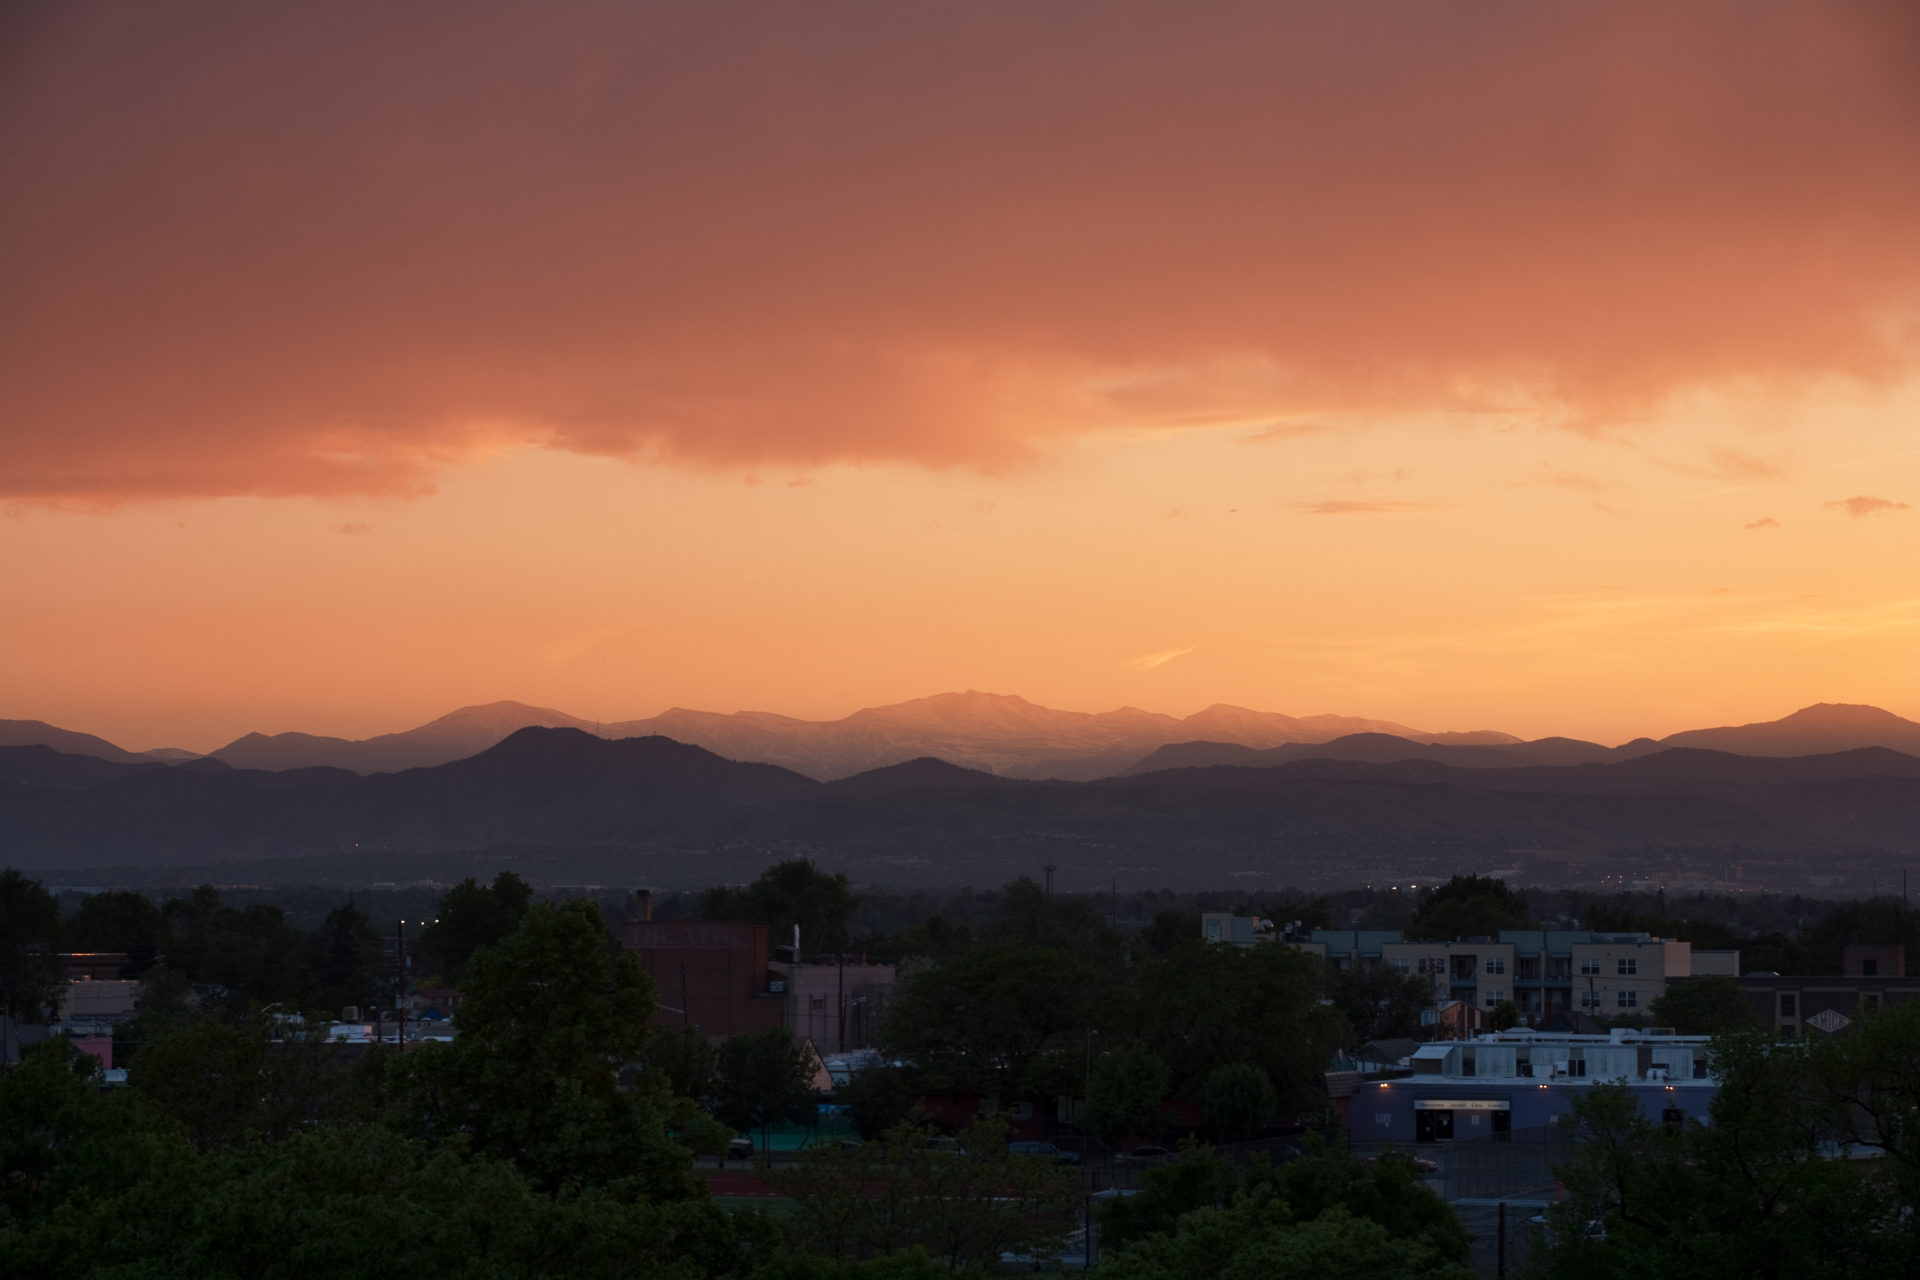 Mount Evans sunset - June 3, 2011